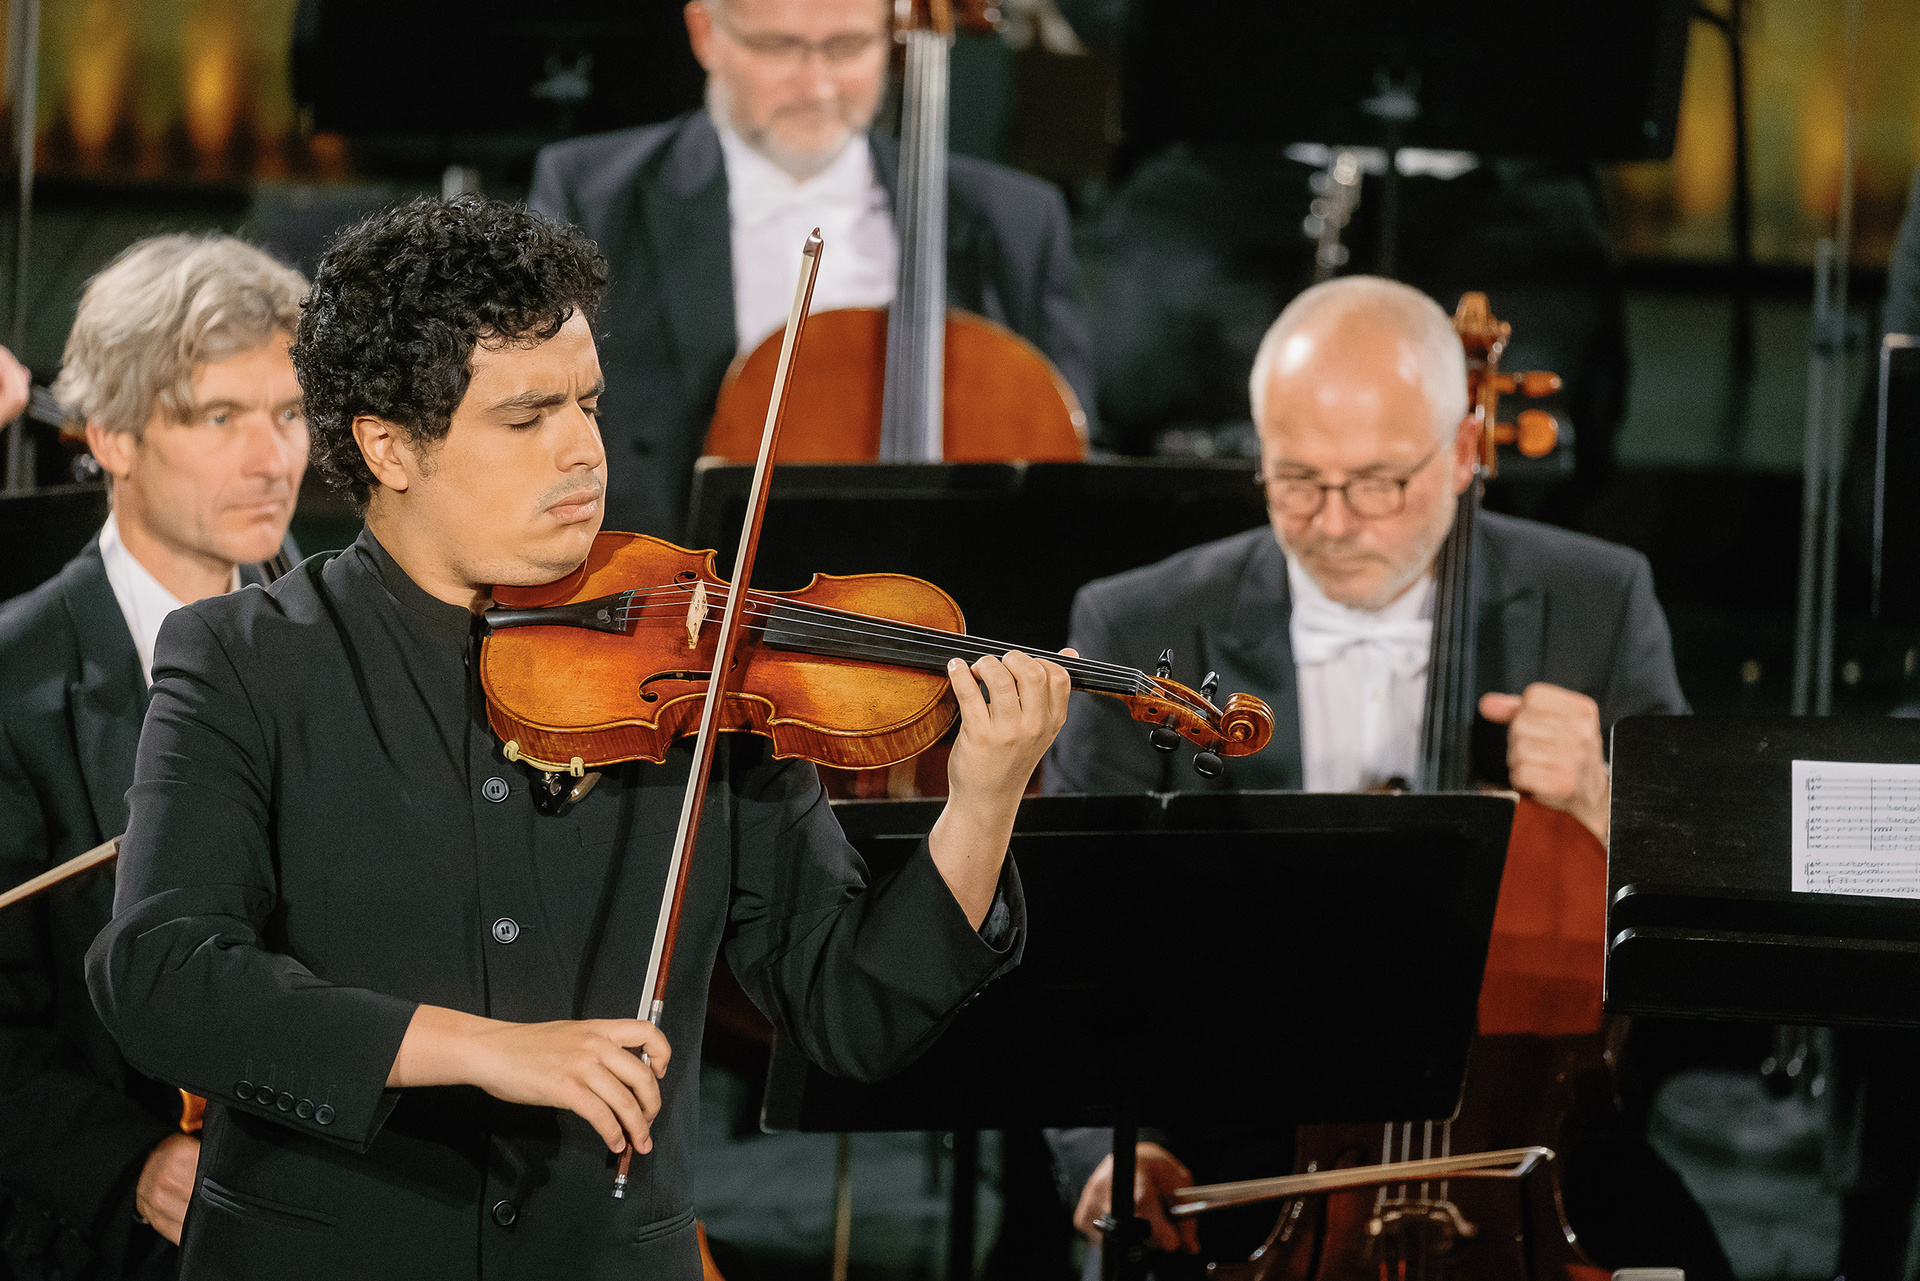 MDR-Musiksommer-Konzert in Wernigerode mit Solist Mohamed Hiber an der Violine © ZDF und MDR/Stephan Flad.